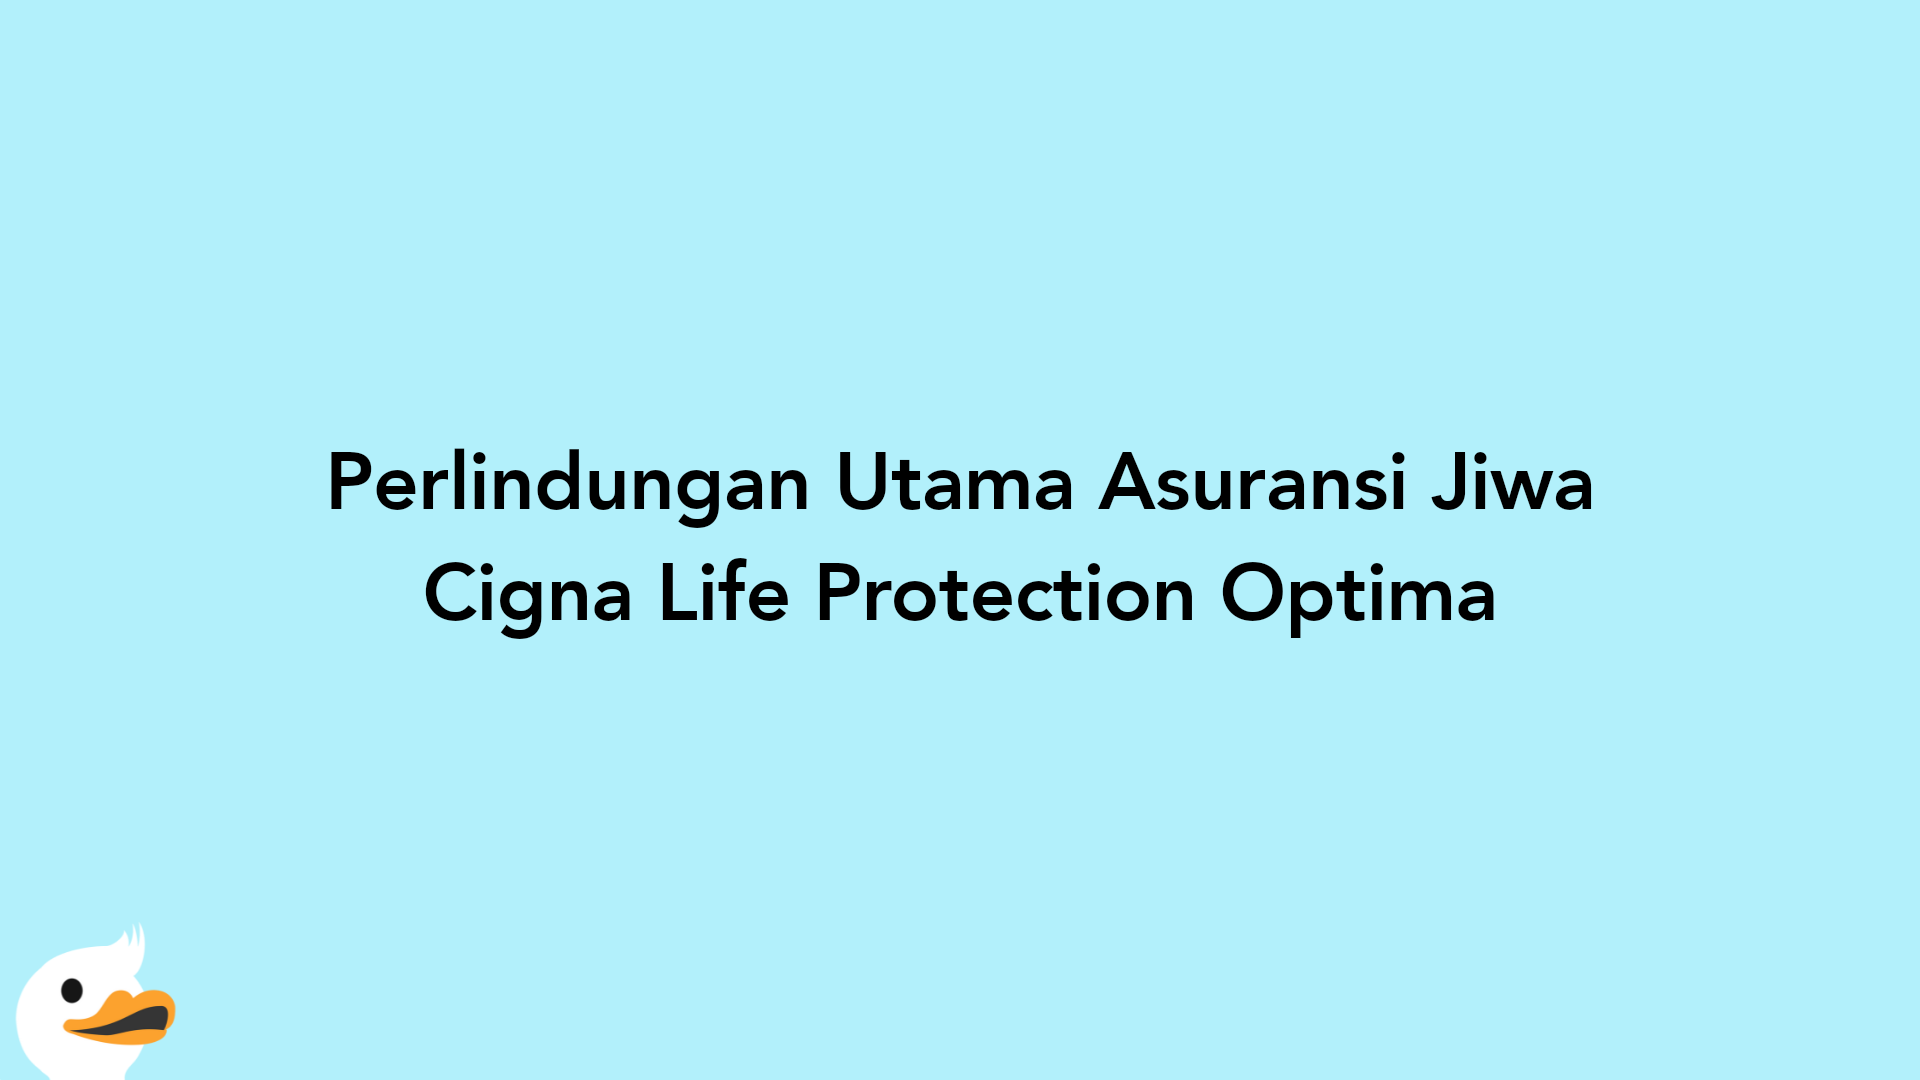 Perlindungan Utama Asuransi Jiwa Cigna Life Protection Optima